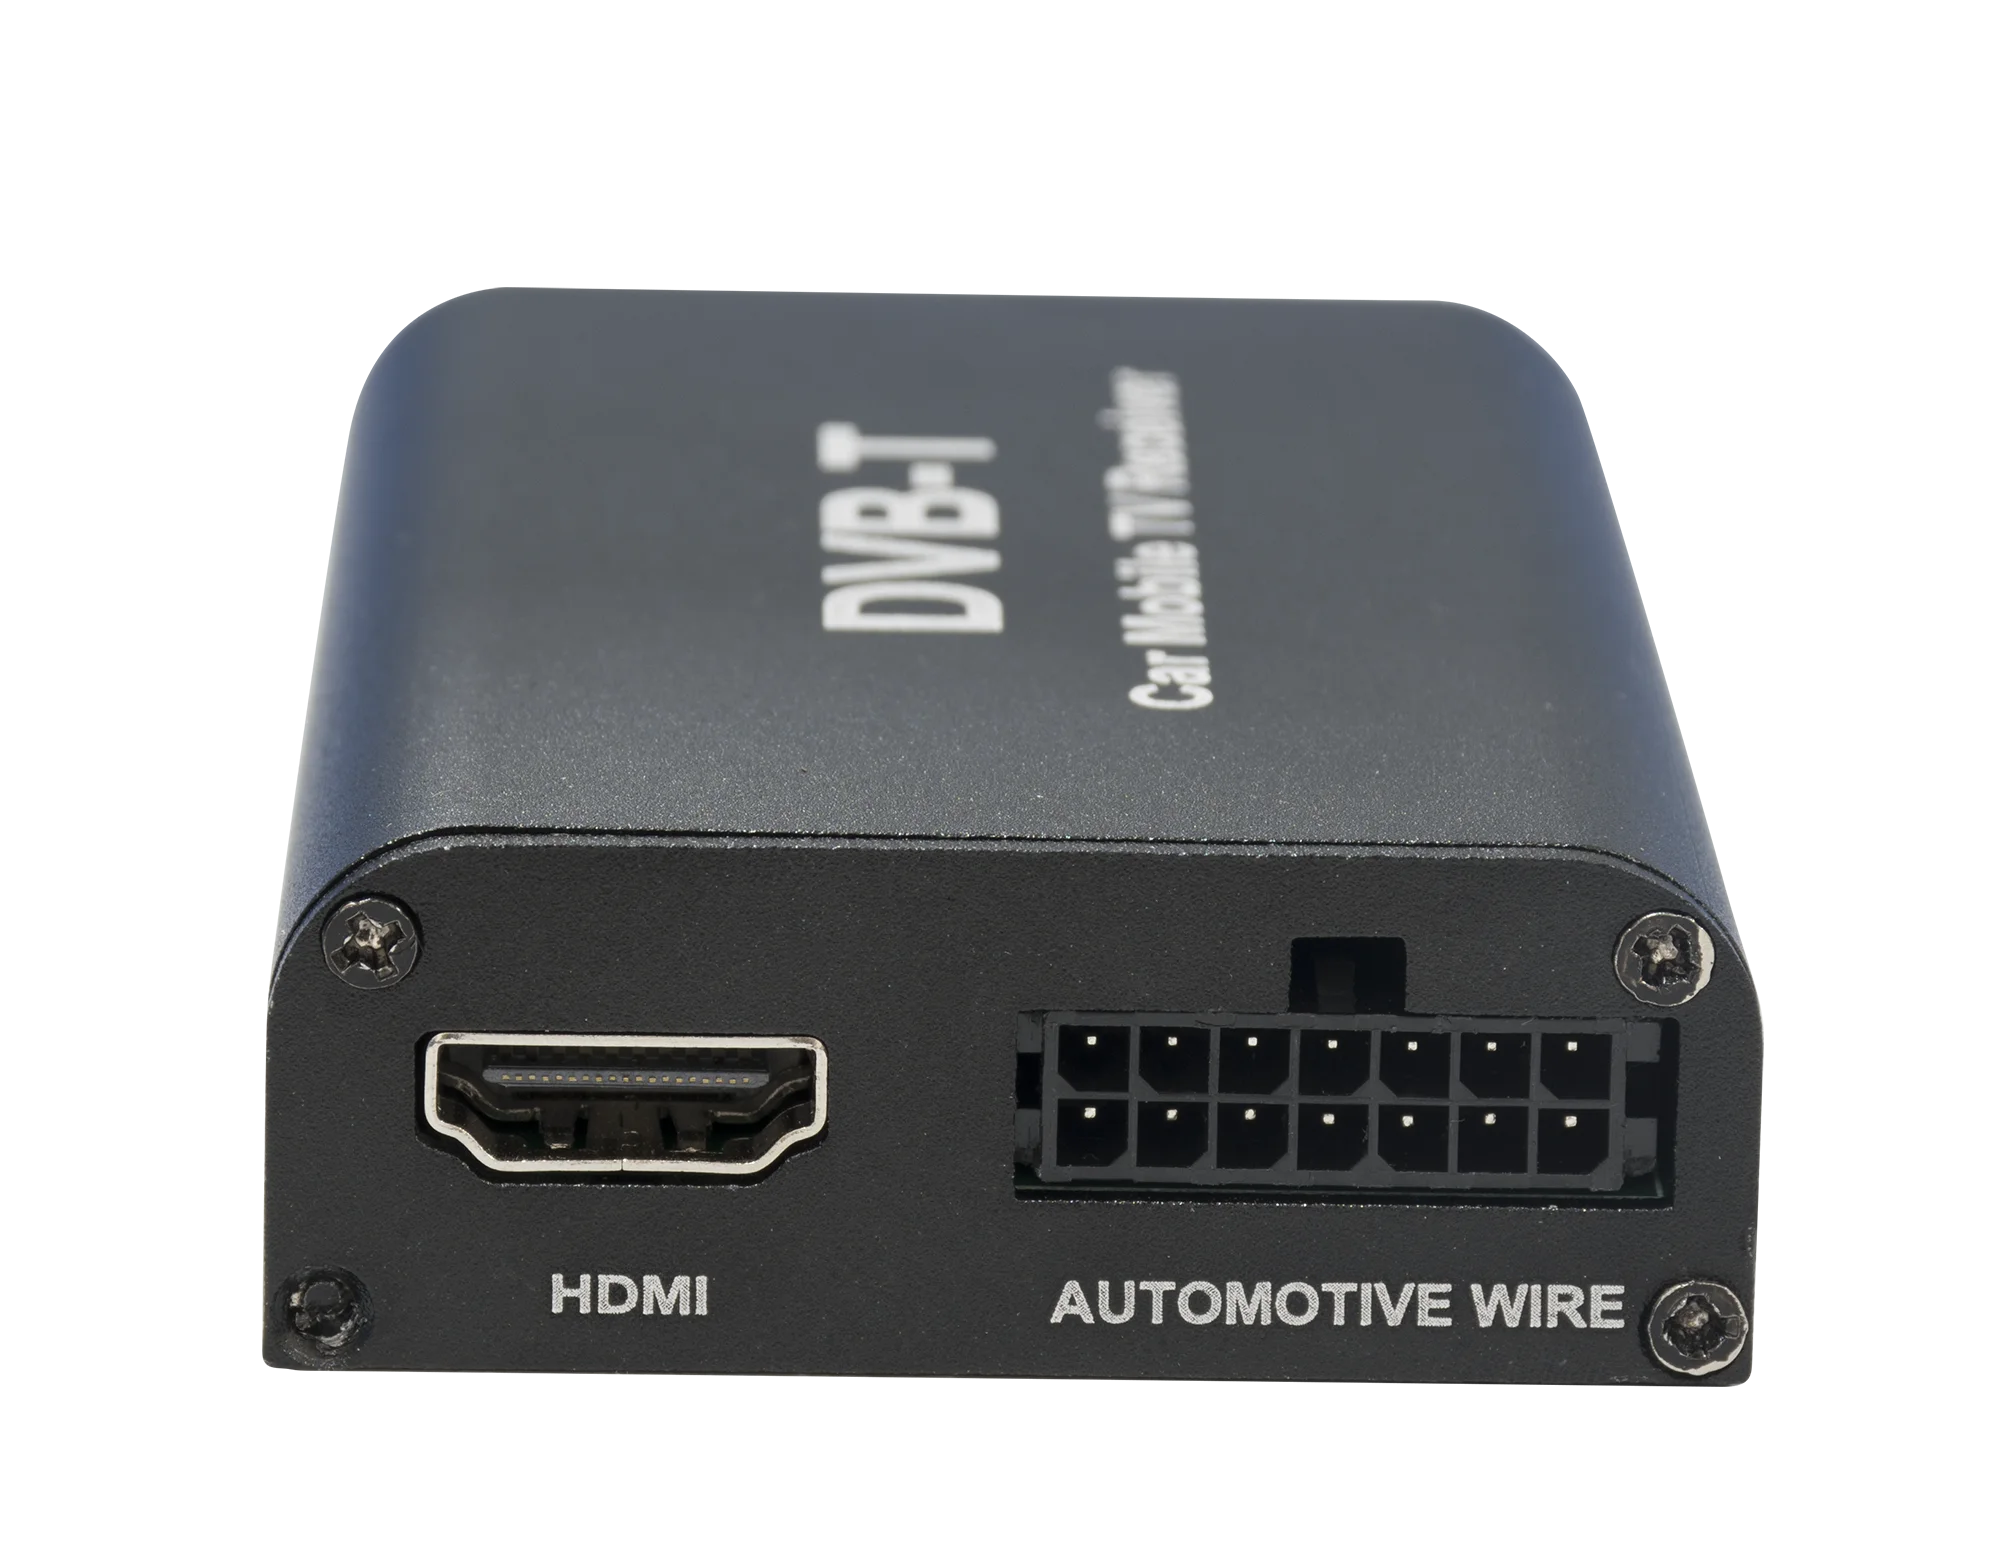 USB Mobile Digital Car DVB-T2 TV Tuner Receiver Box - China TV Box,  Receiver Box